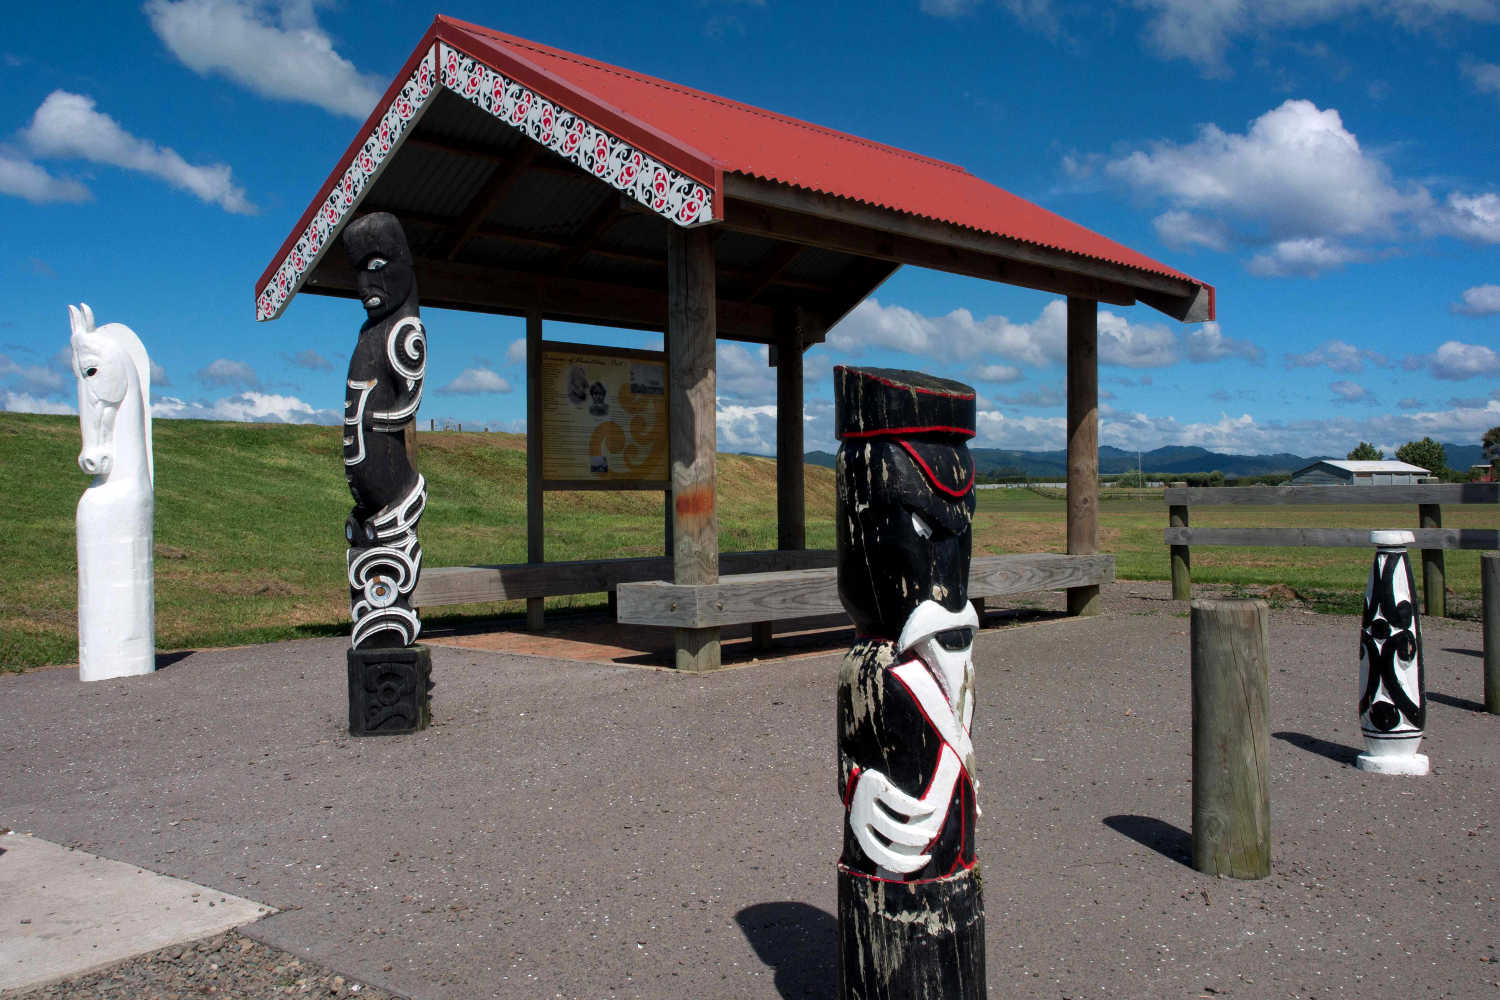 Memorial to 1865 invasion of Whakatohea of Maori land, Opotiki, NZ